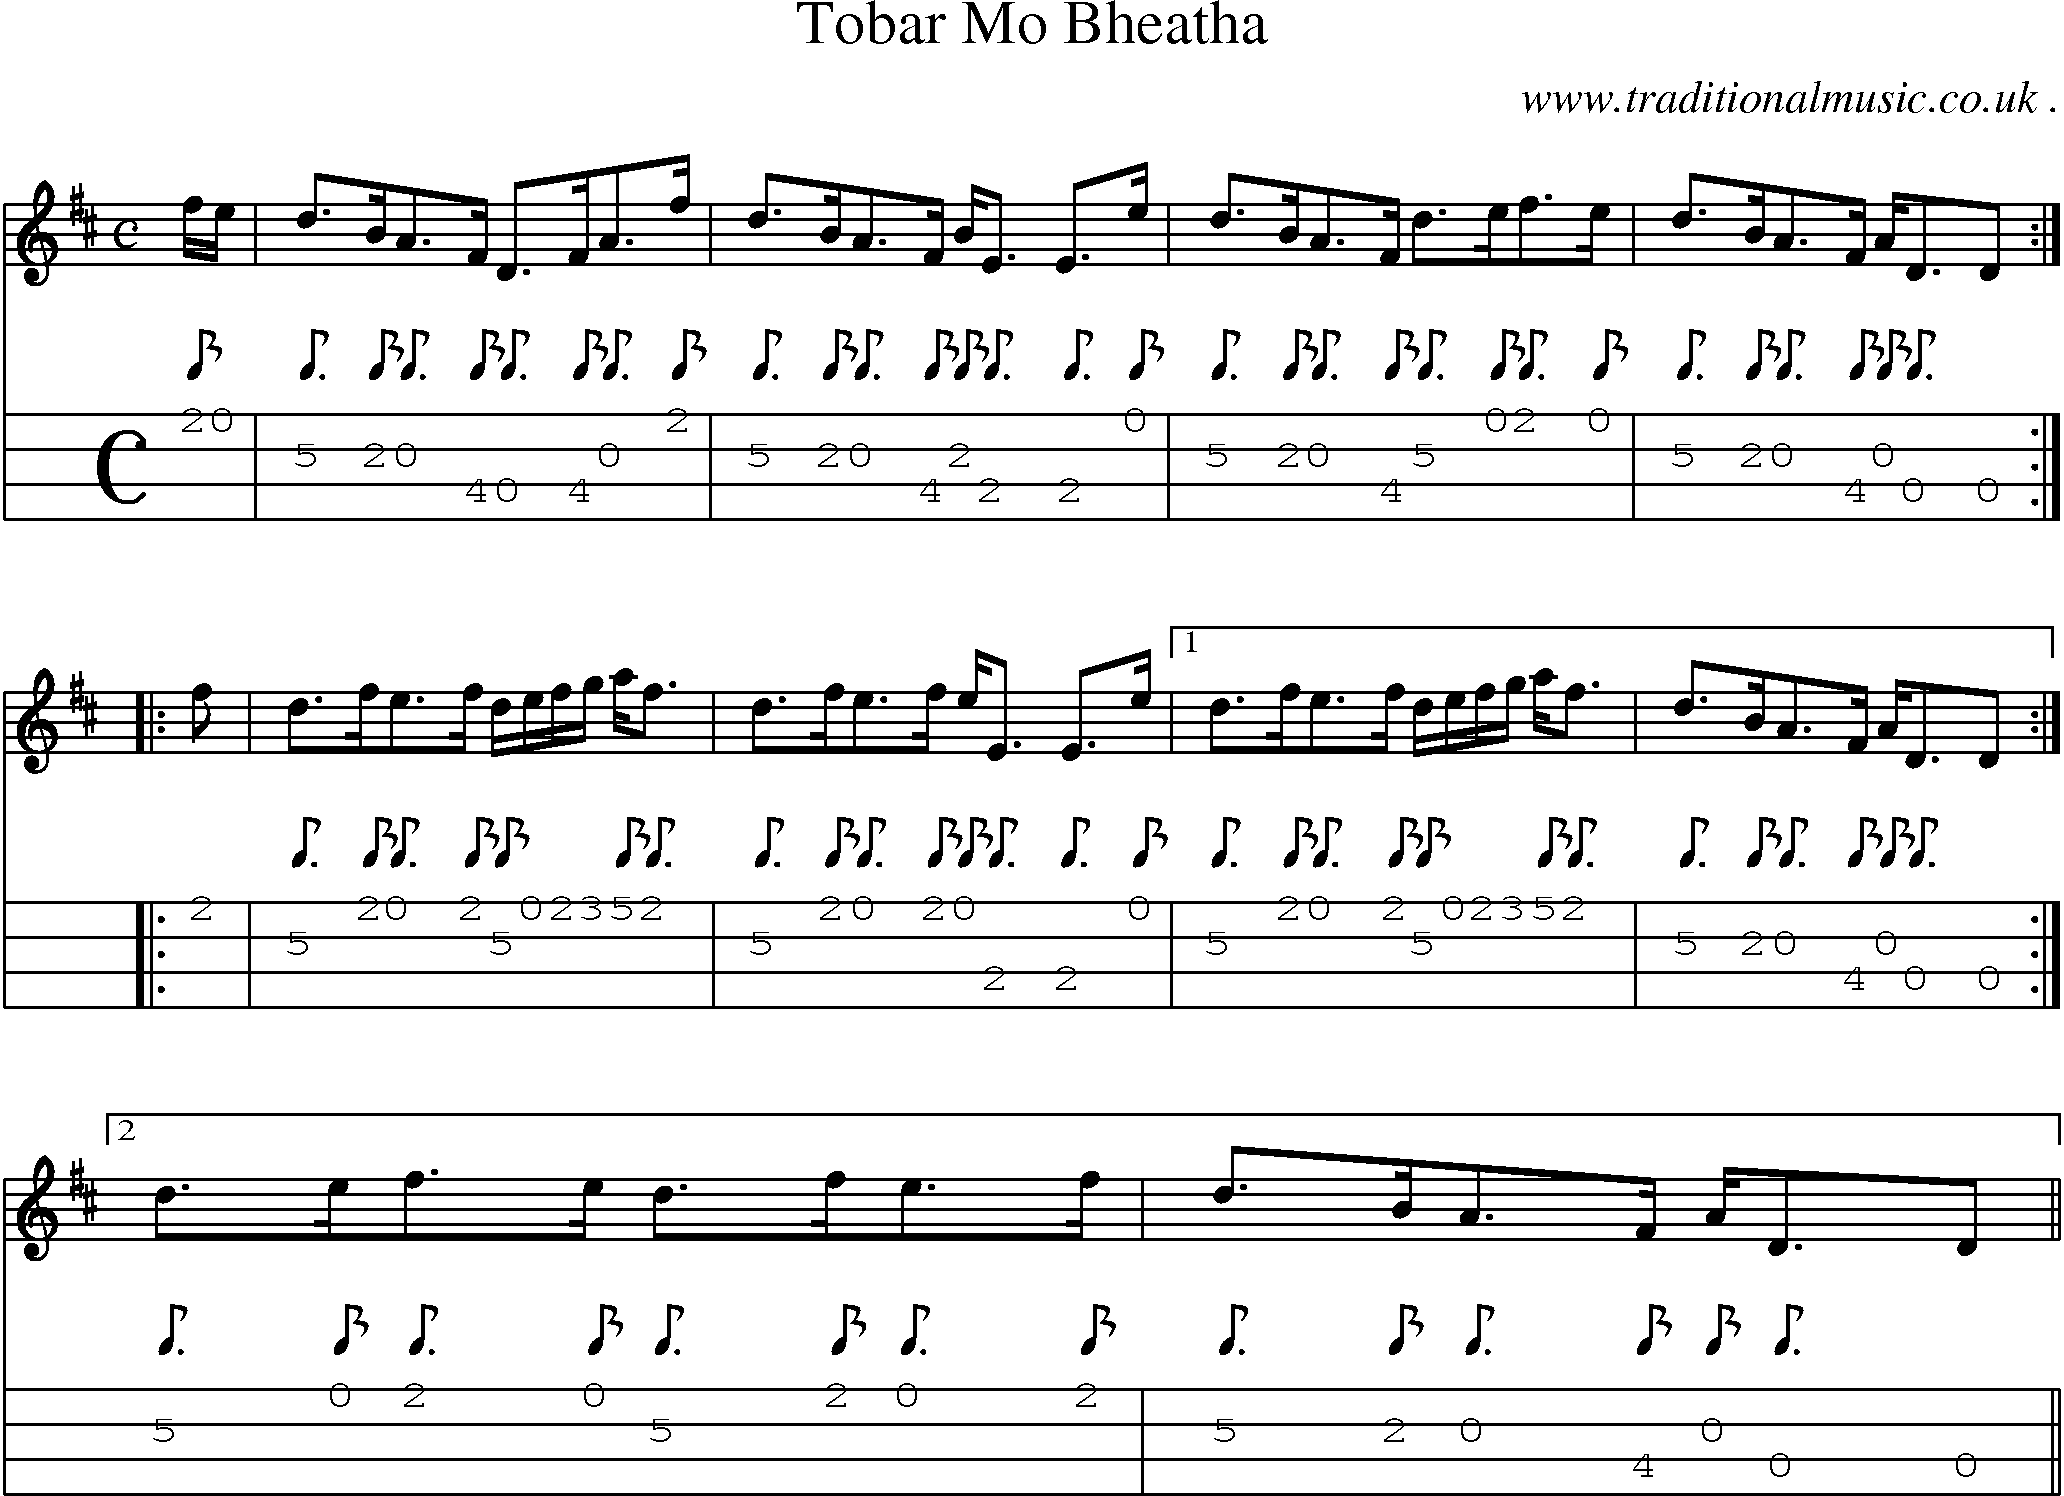 Sheet-music  score, Chords and Mandolin Tabs for Tobar Mo Bheatha